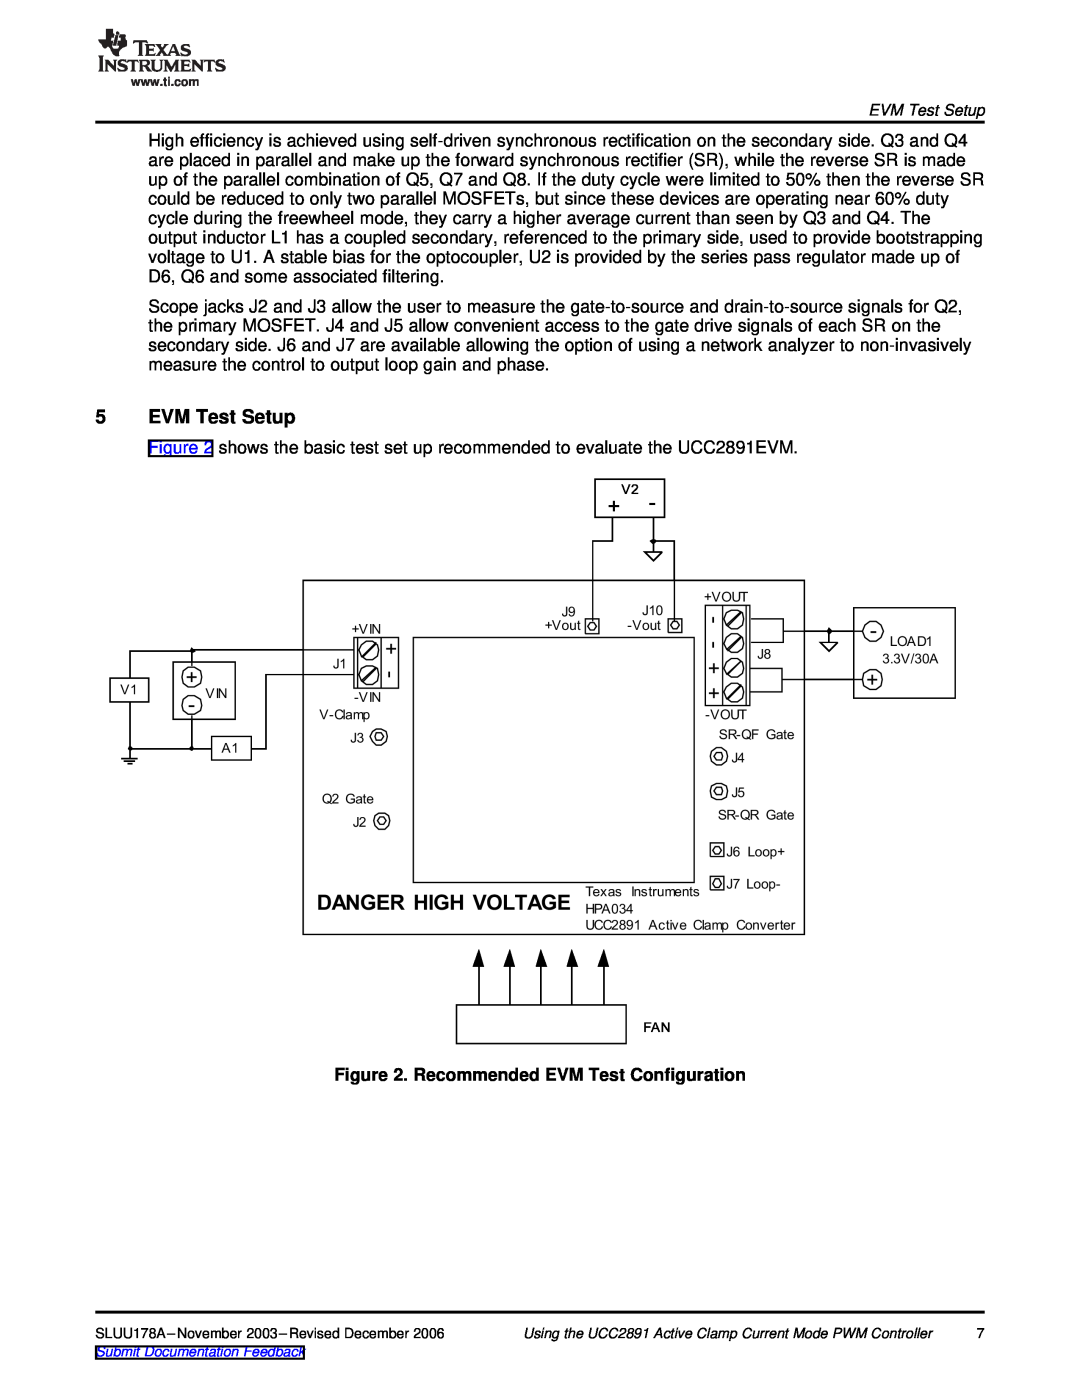 Texas Instruments UCC2891 manual EVM Test Setup, Recommended EVM Test Configuration, Danger High Voltage 